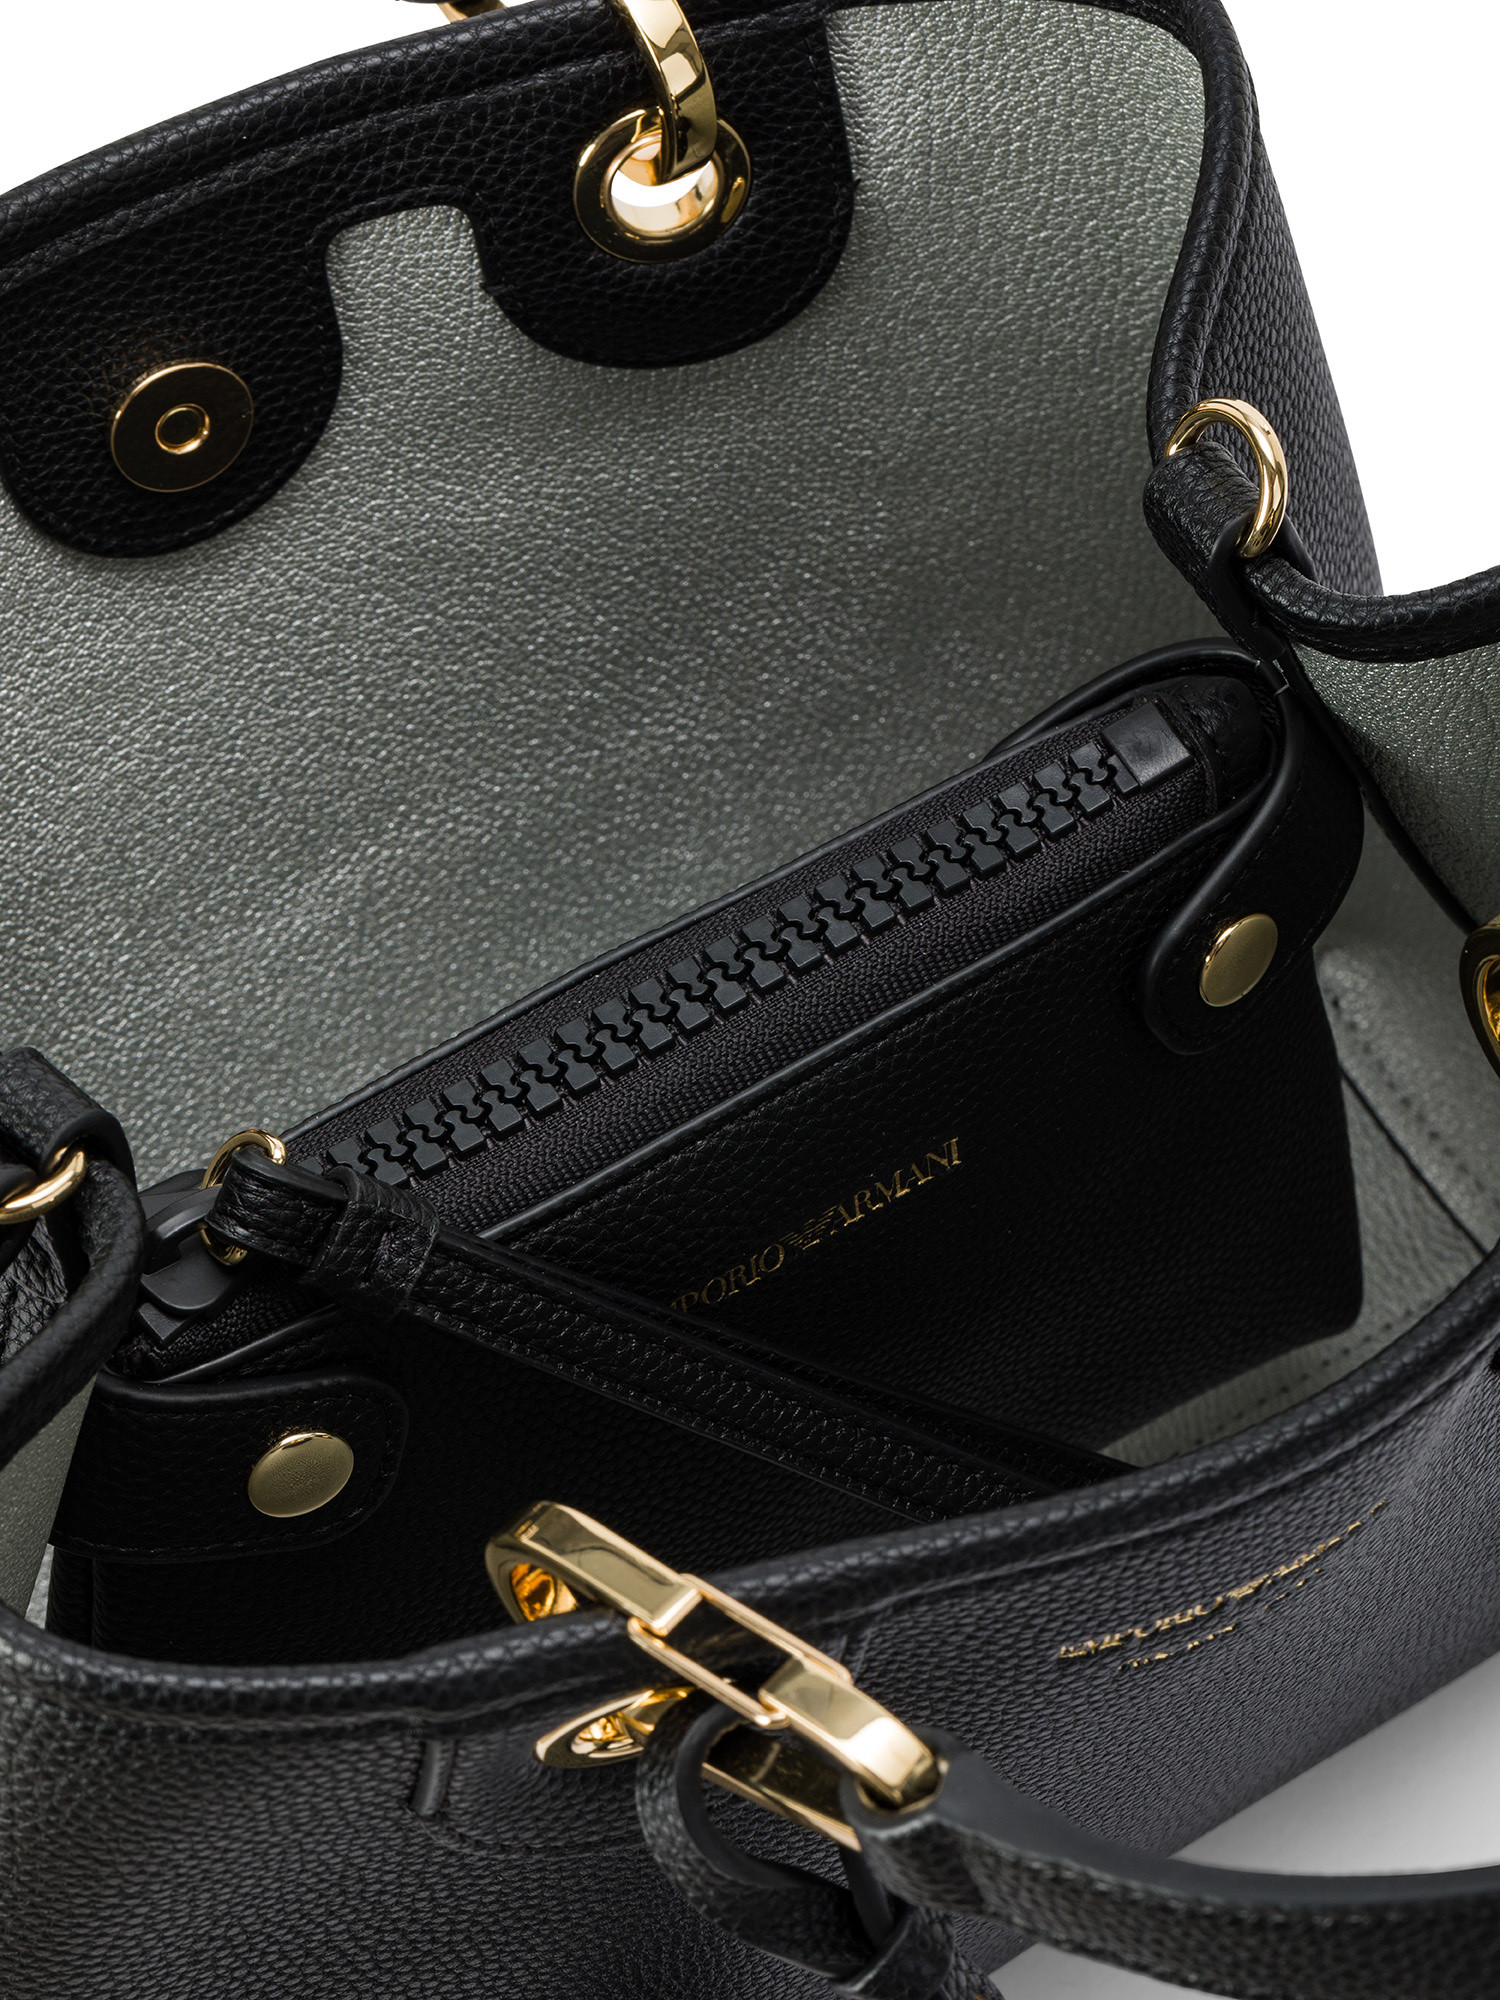 Emporio Armani - Small handbag with deer print, Black, large image number 2